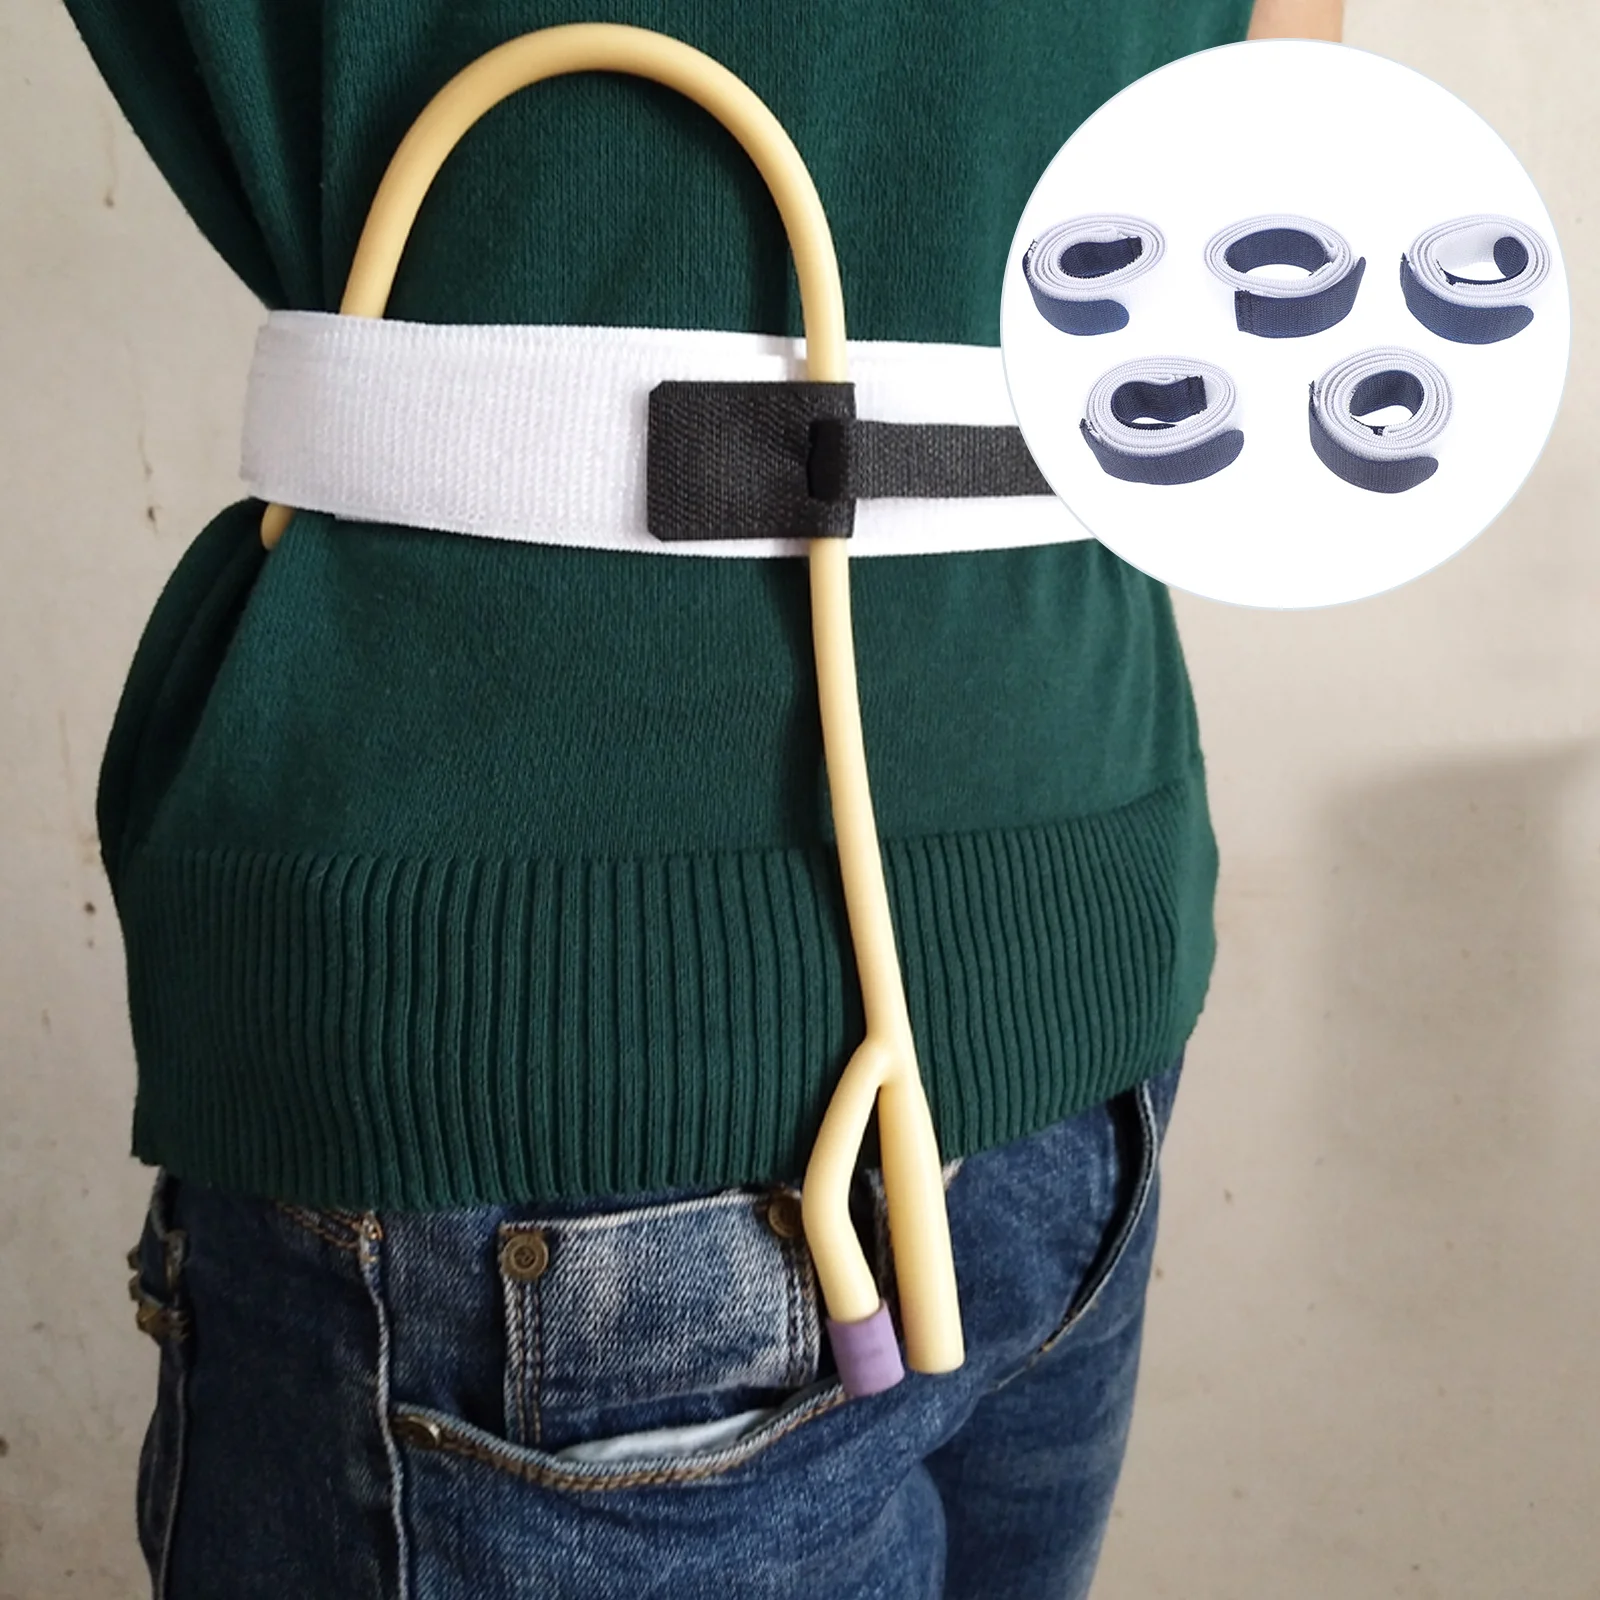 5 PCS Nonslip Practical Fixing Straps Catheter Holders Convenient Drainage Bag Fixing Straps for Men